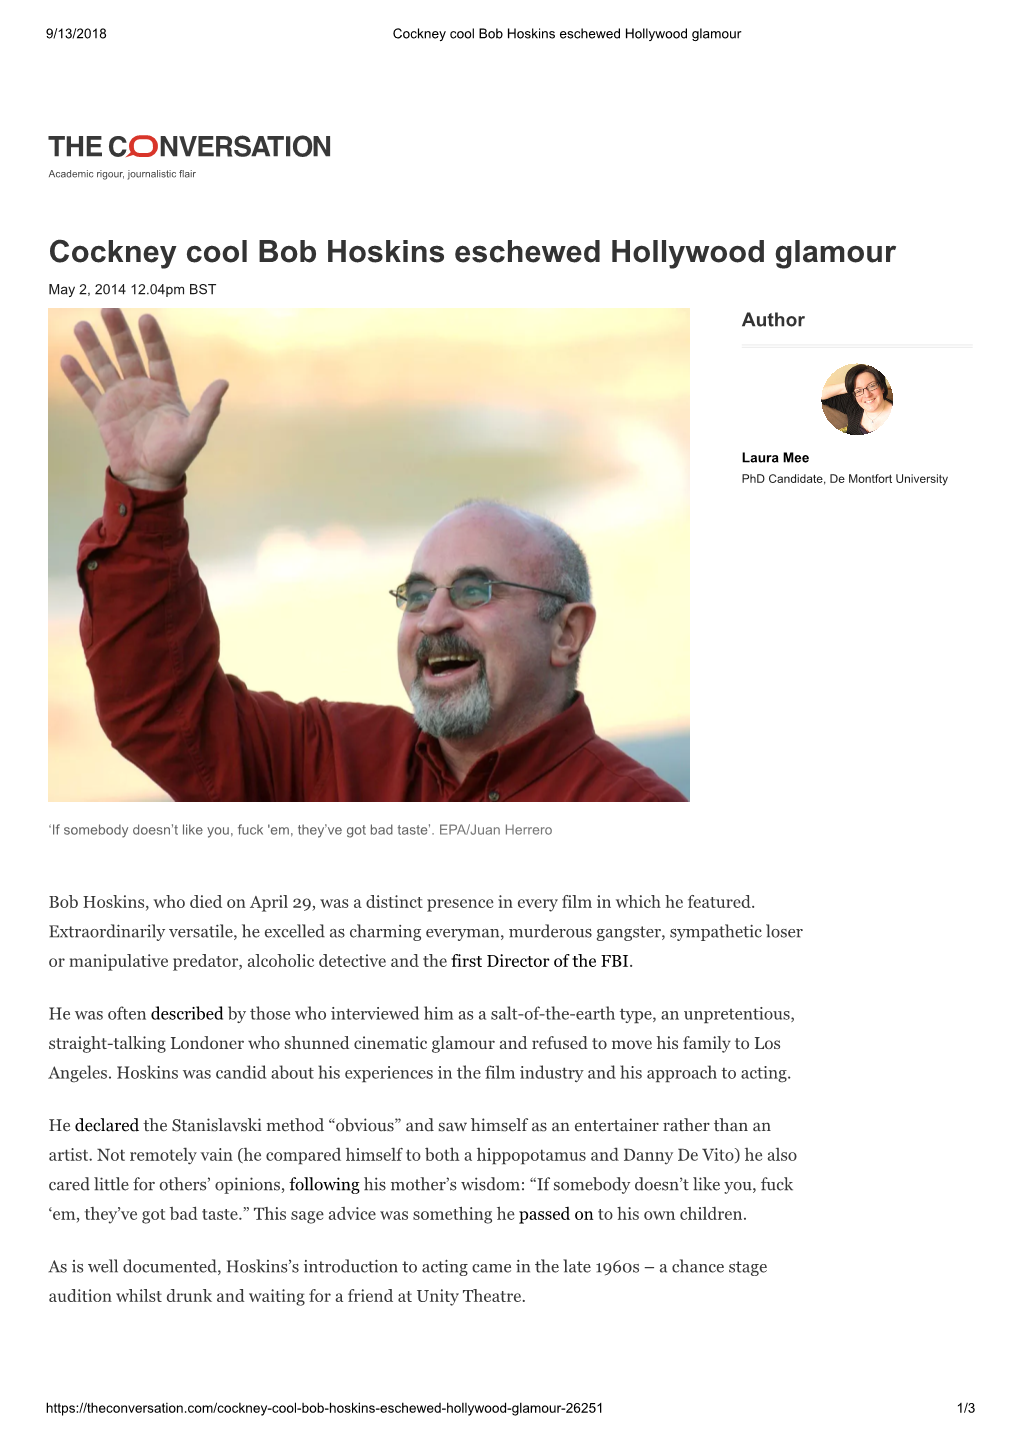 Cockney Cool Bob Hoskins Eschewed Hollywood Glamour